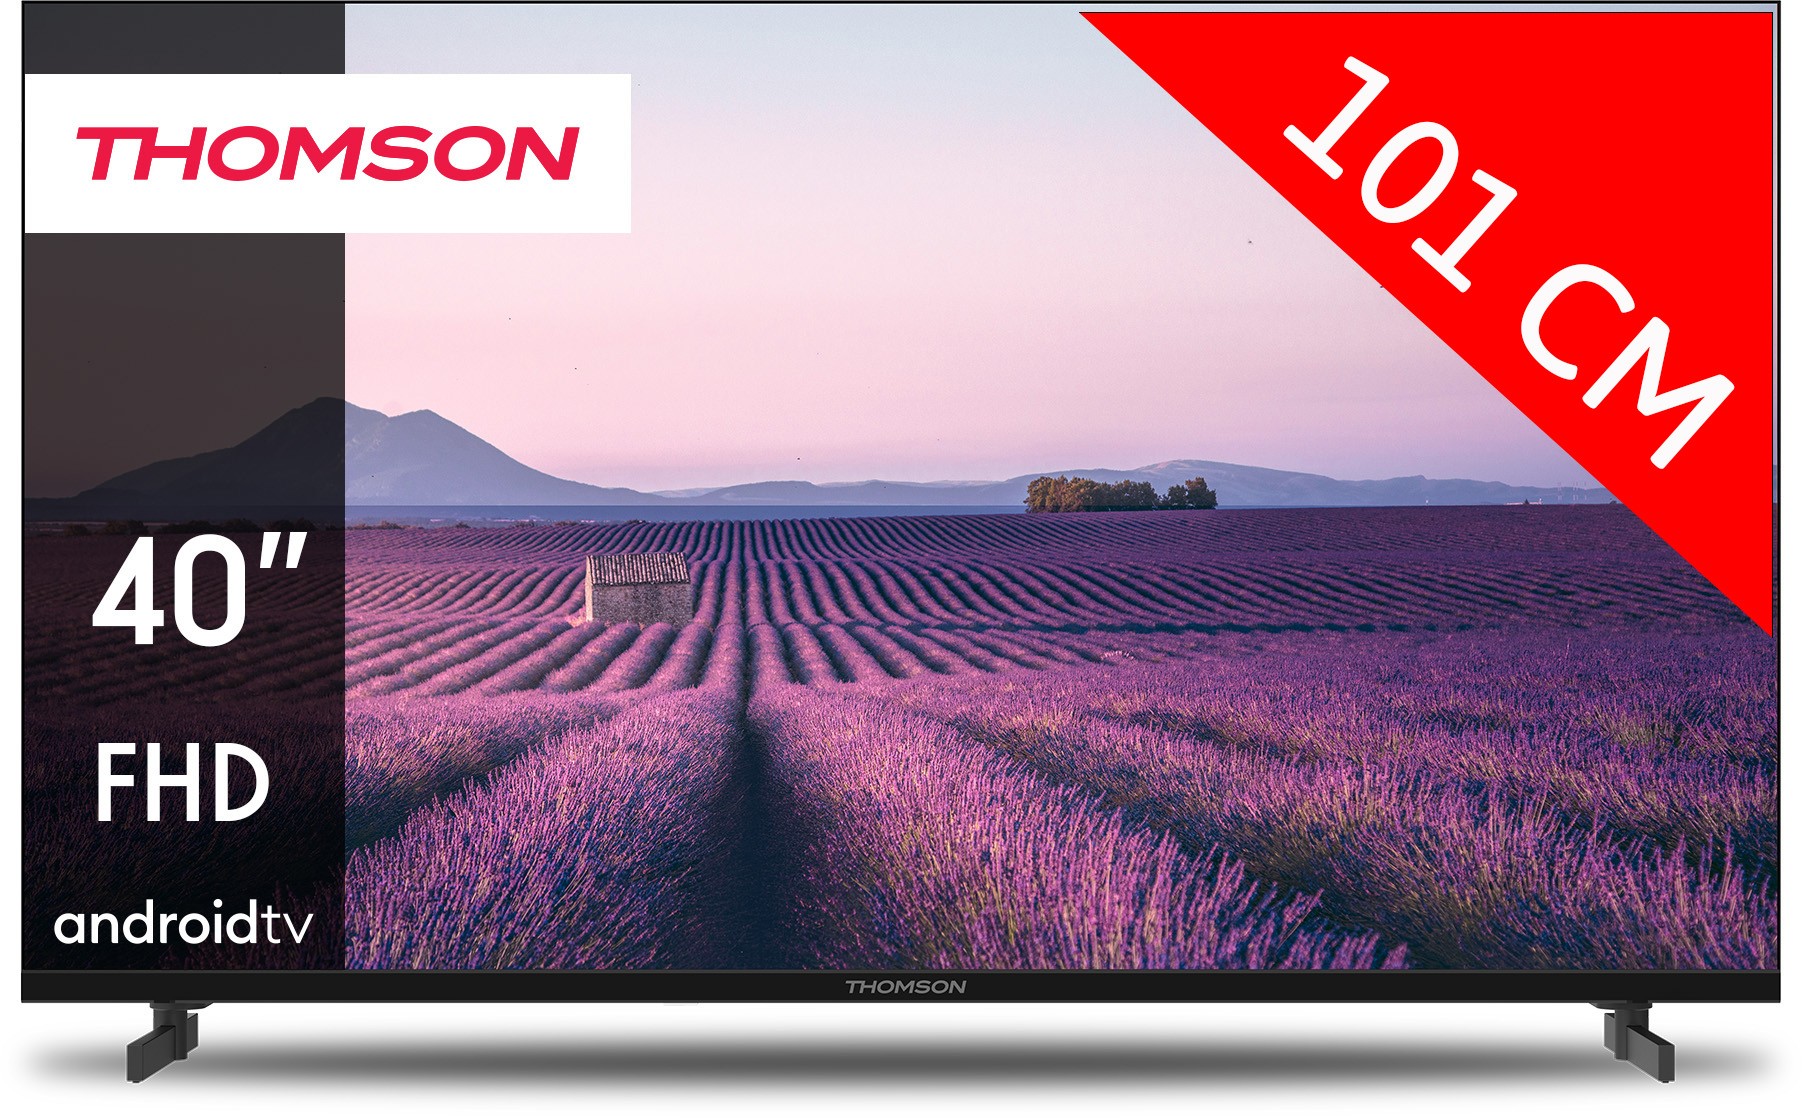 THOMSON TV LED Full HD 101 cm 60Hz Android TV 40"  40FA2S13